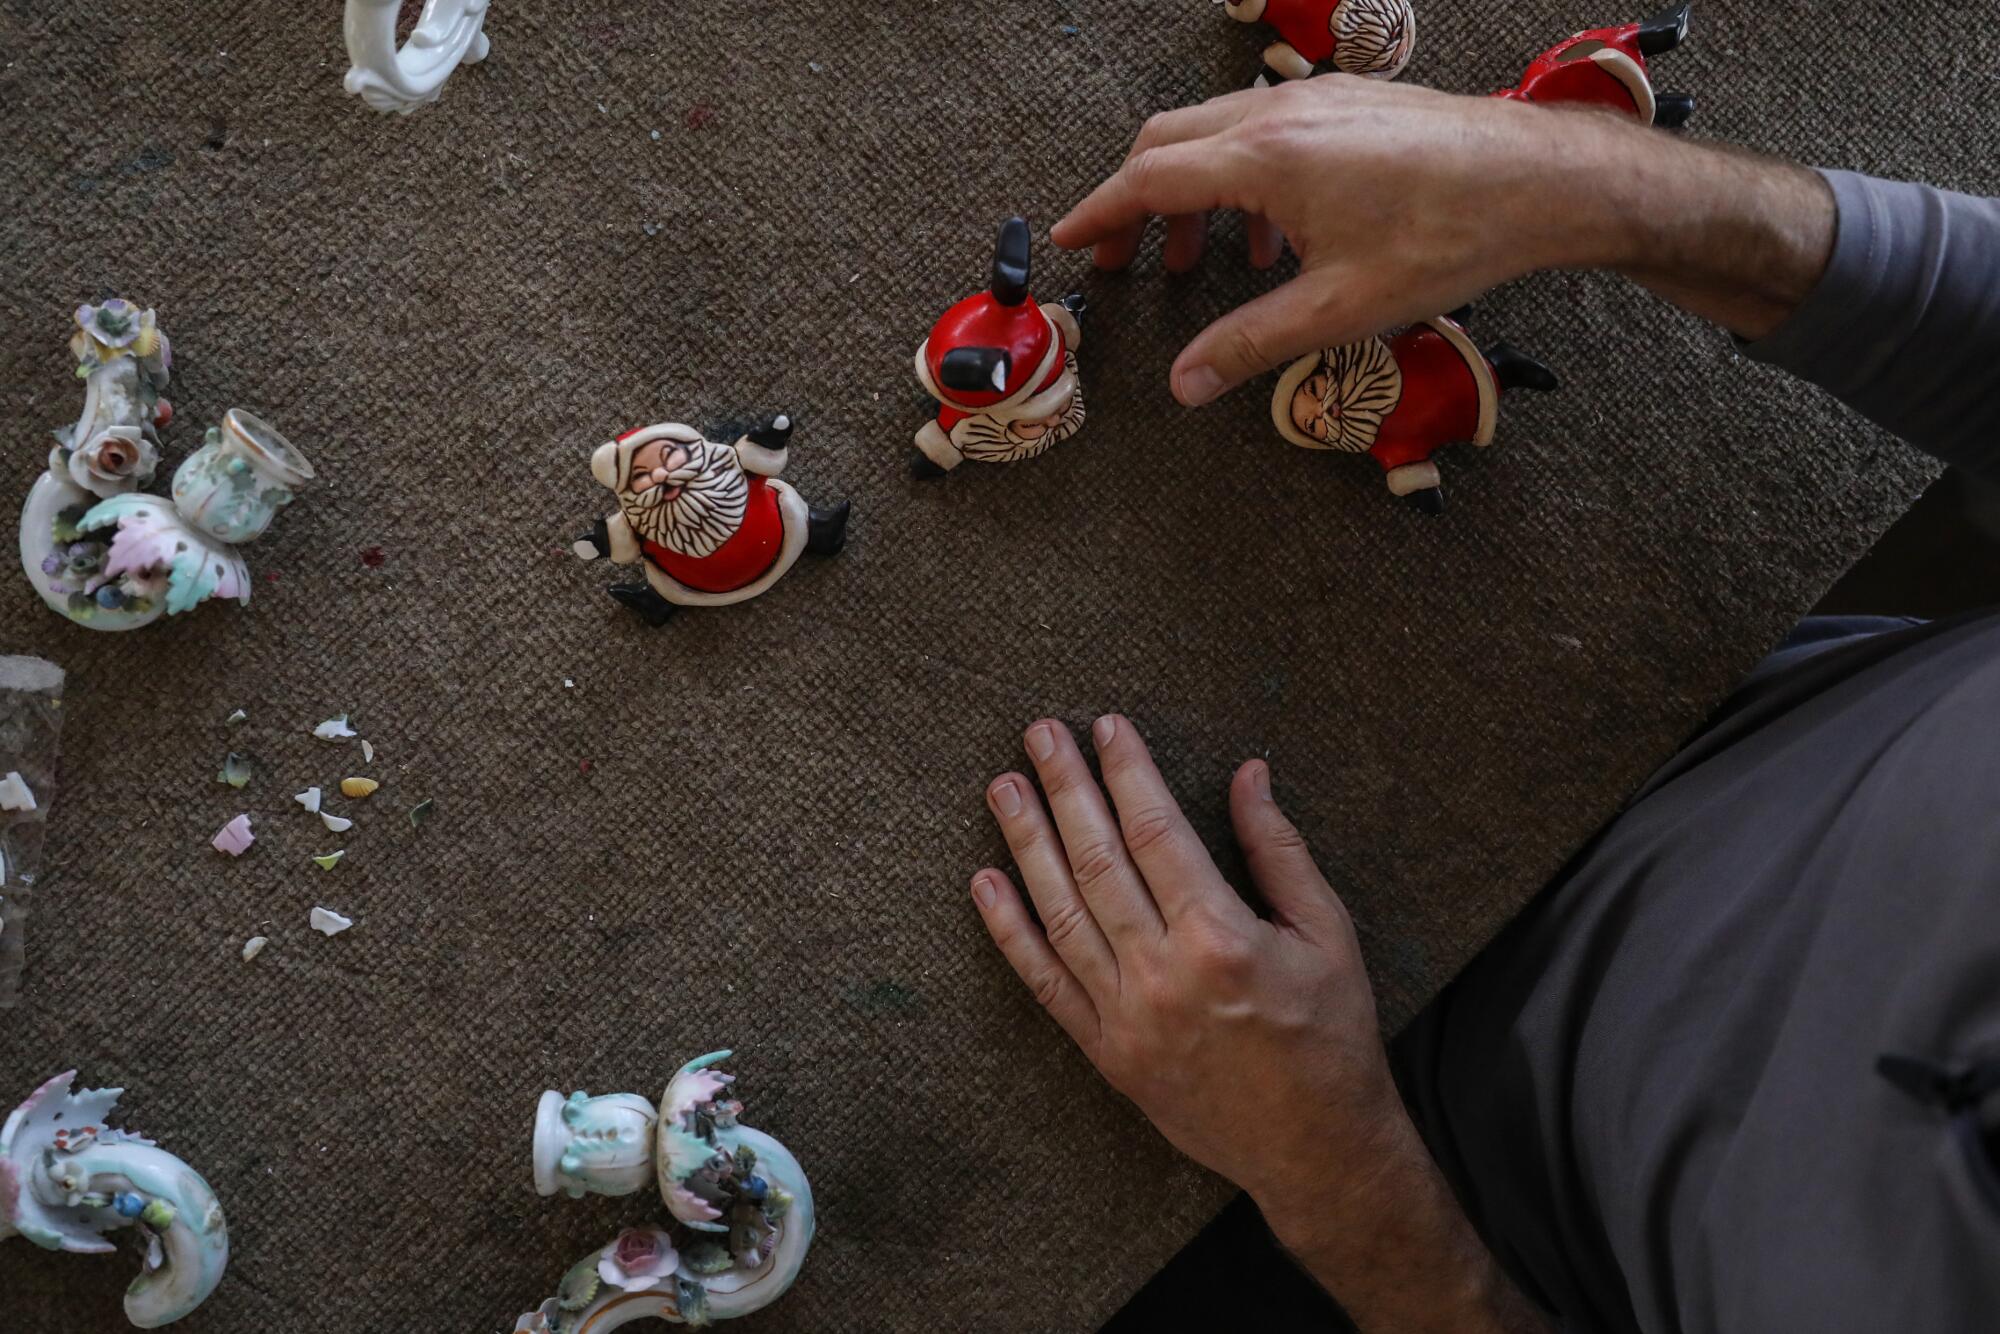 Ceramic Santa Claus figurines on a work table.